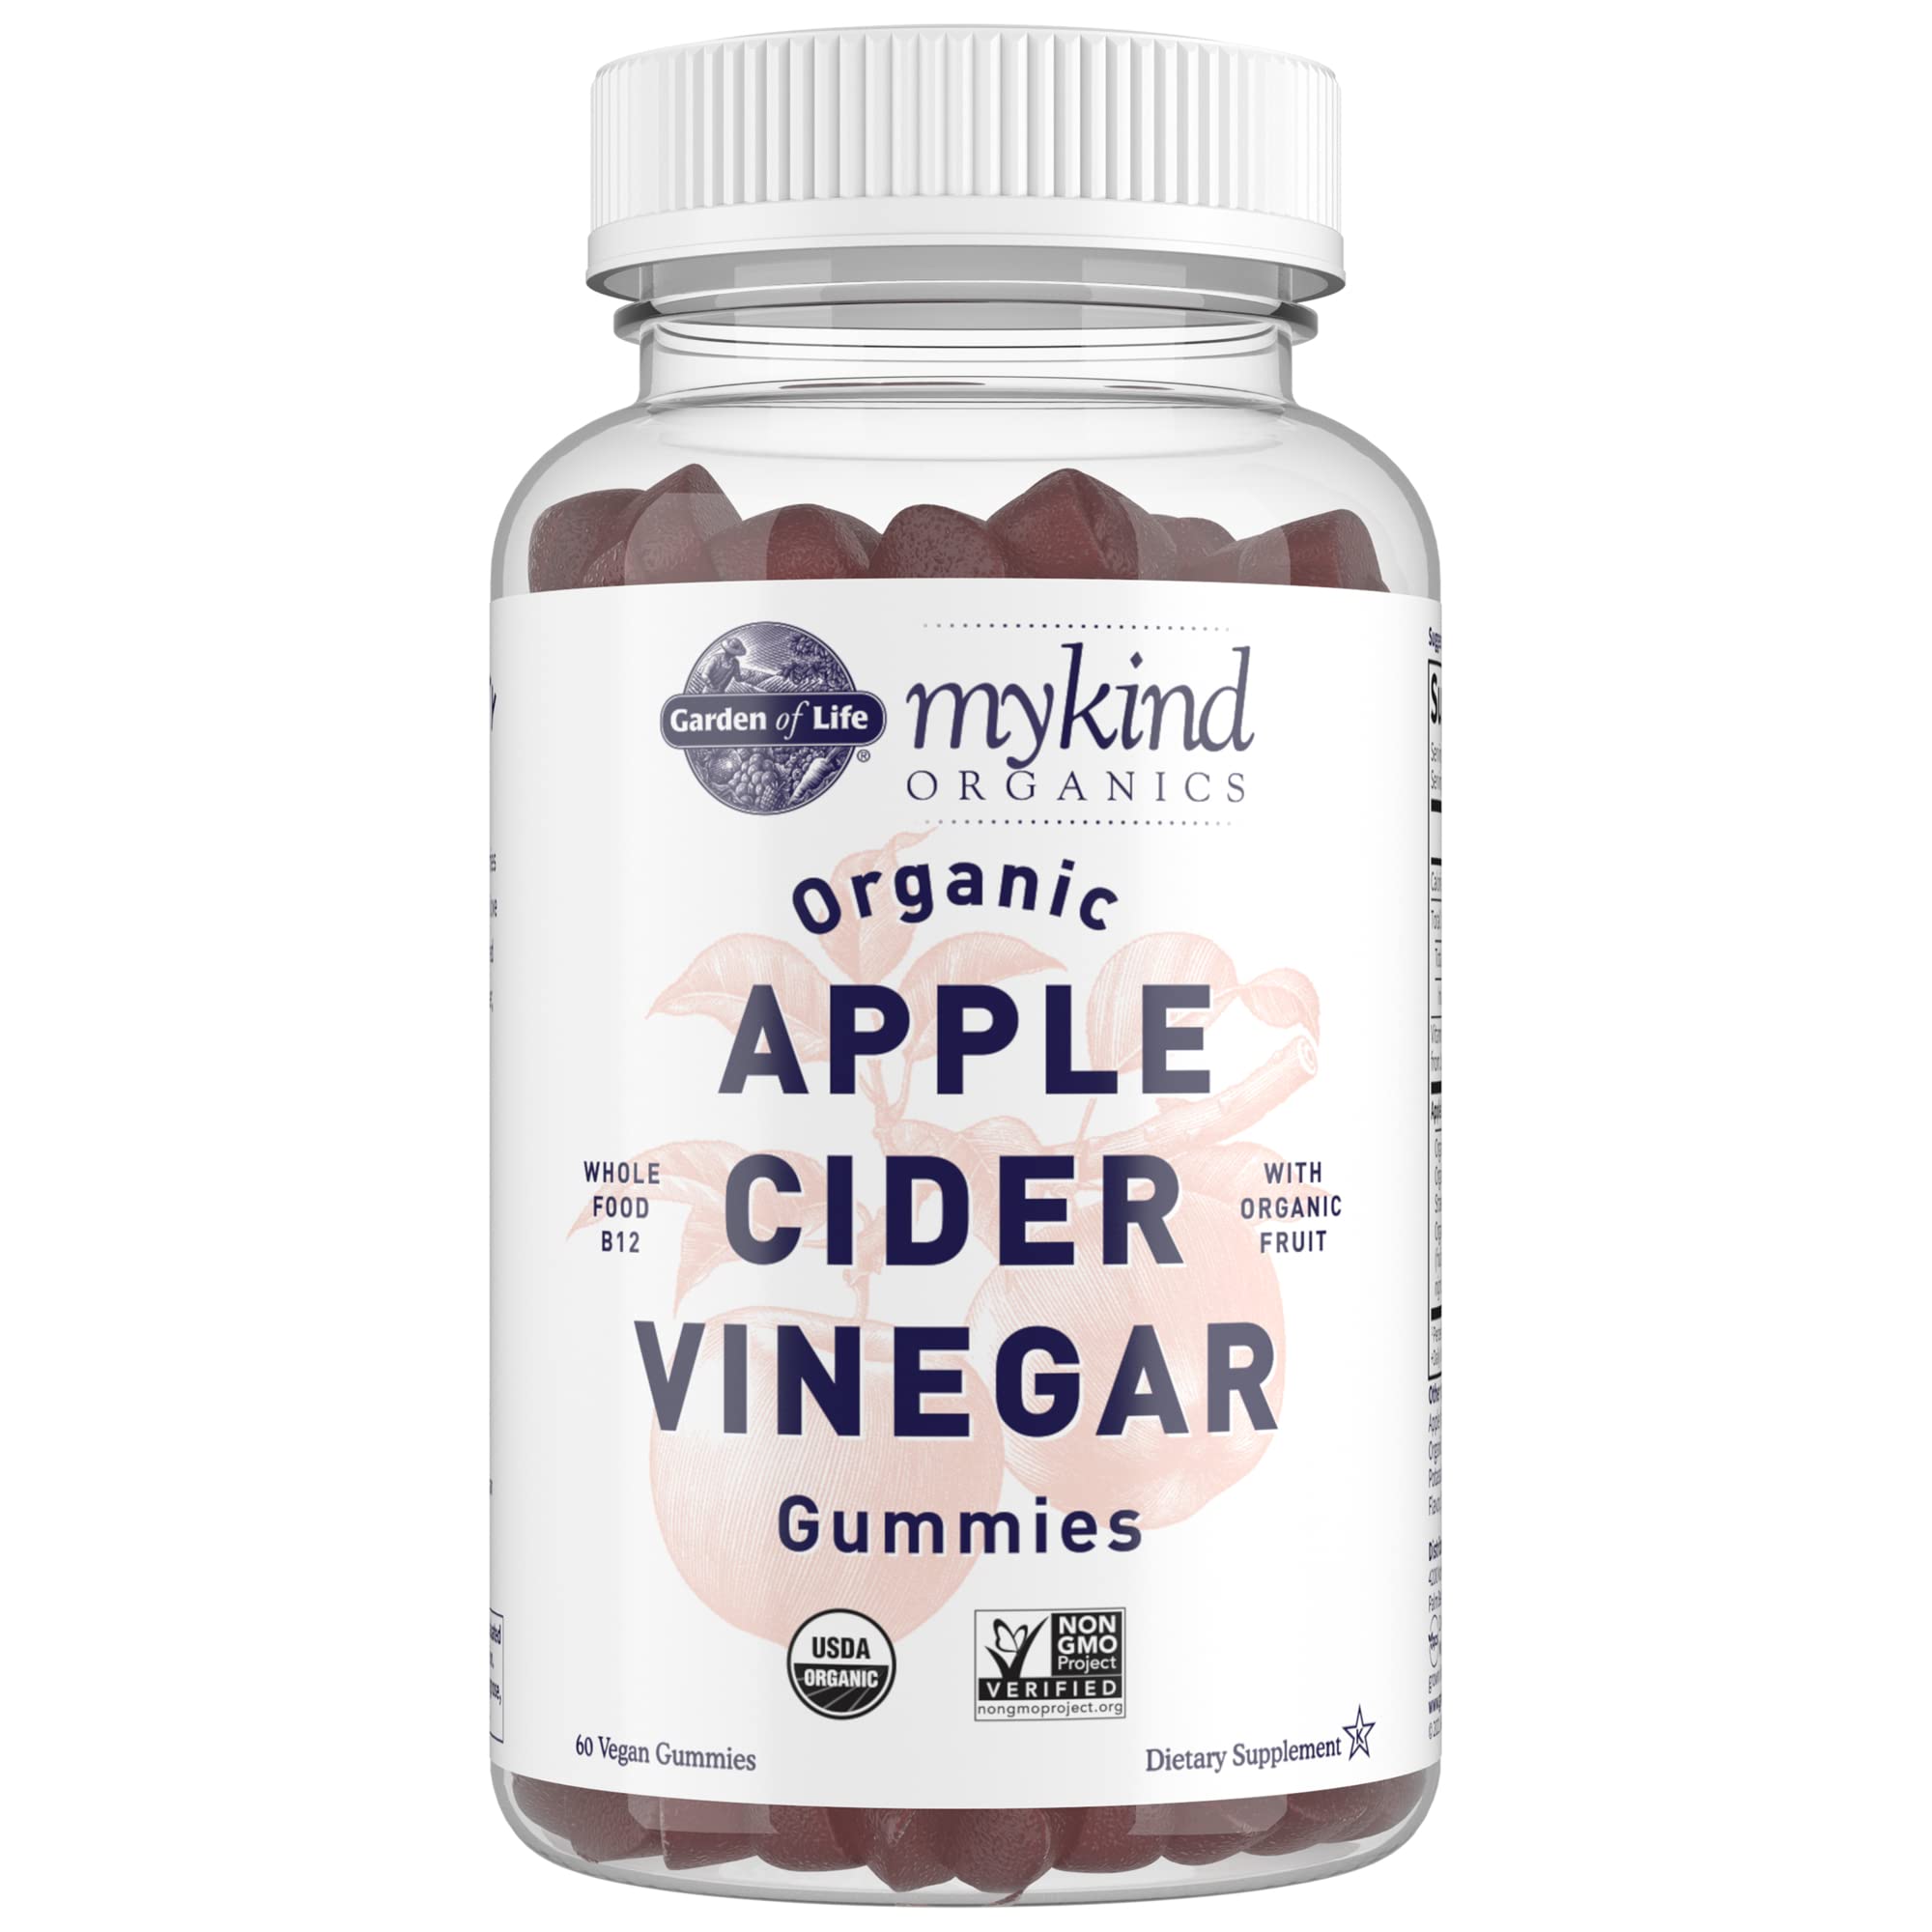 Garden of Life Apple Cider Vinegar Gummies mykind Organics – USDA Organic ACV Gummy Vitamins Made with Real Fruit Blend, Whole Food Vitamin B12 - Vegan, Gluten Free, Non-GMO, Kosher - 60 Gummies